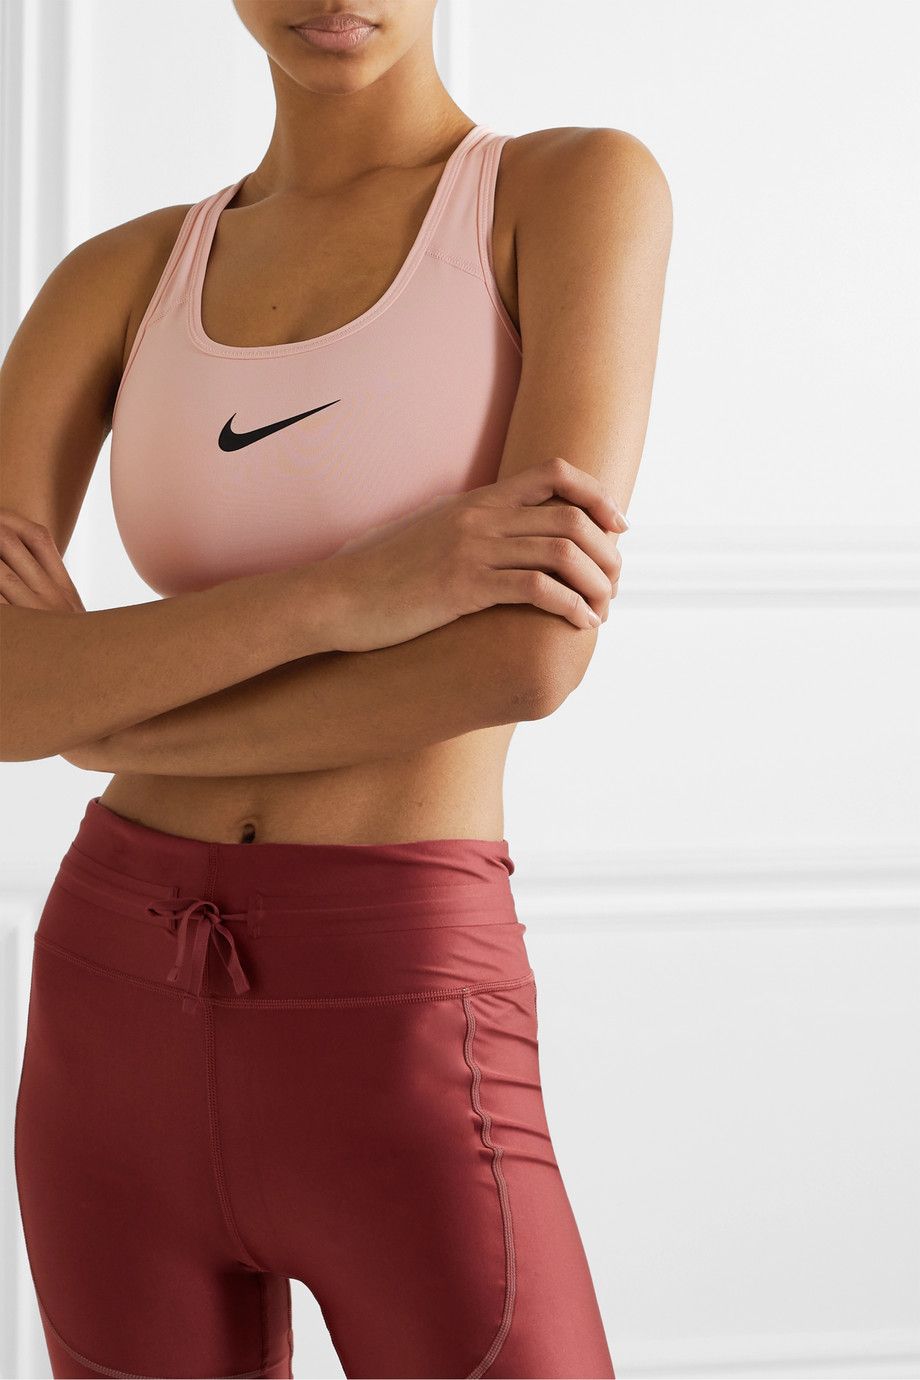 women swear by this £27 Nike sports bra